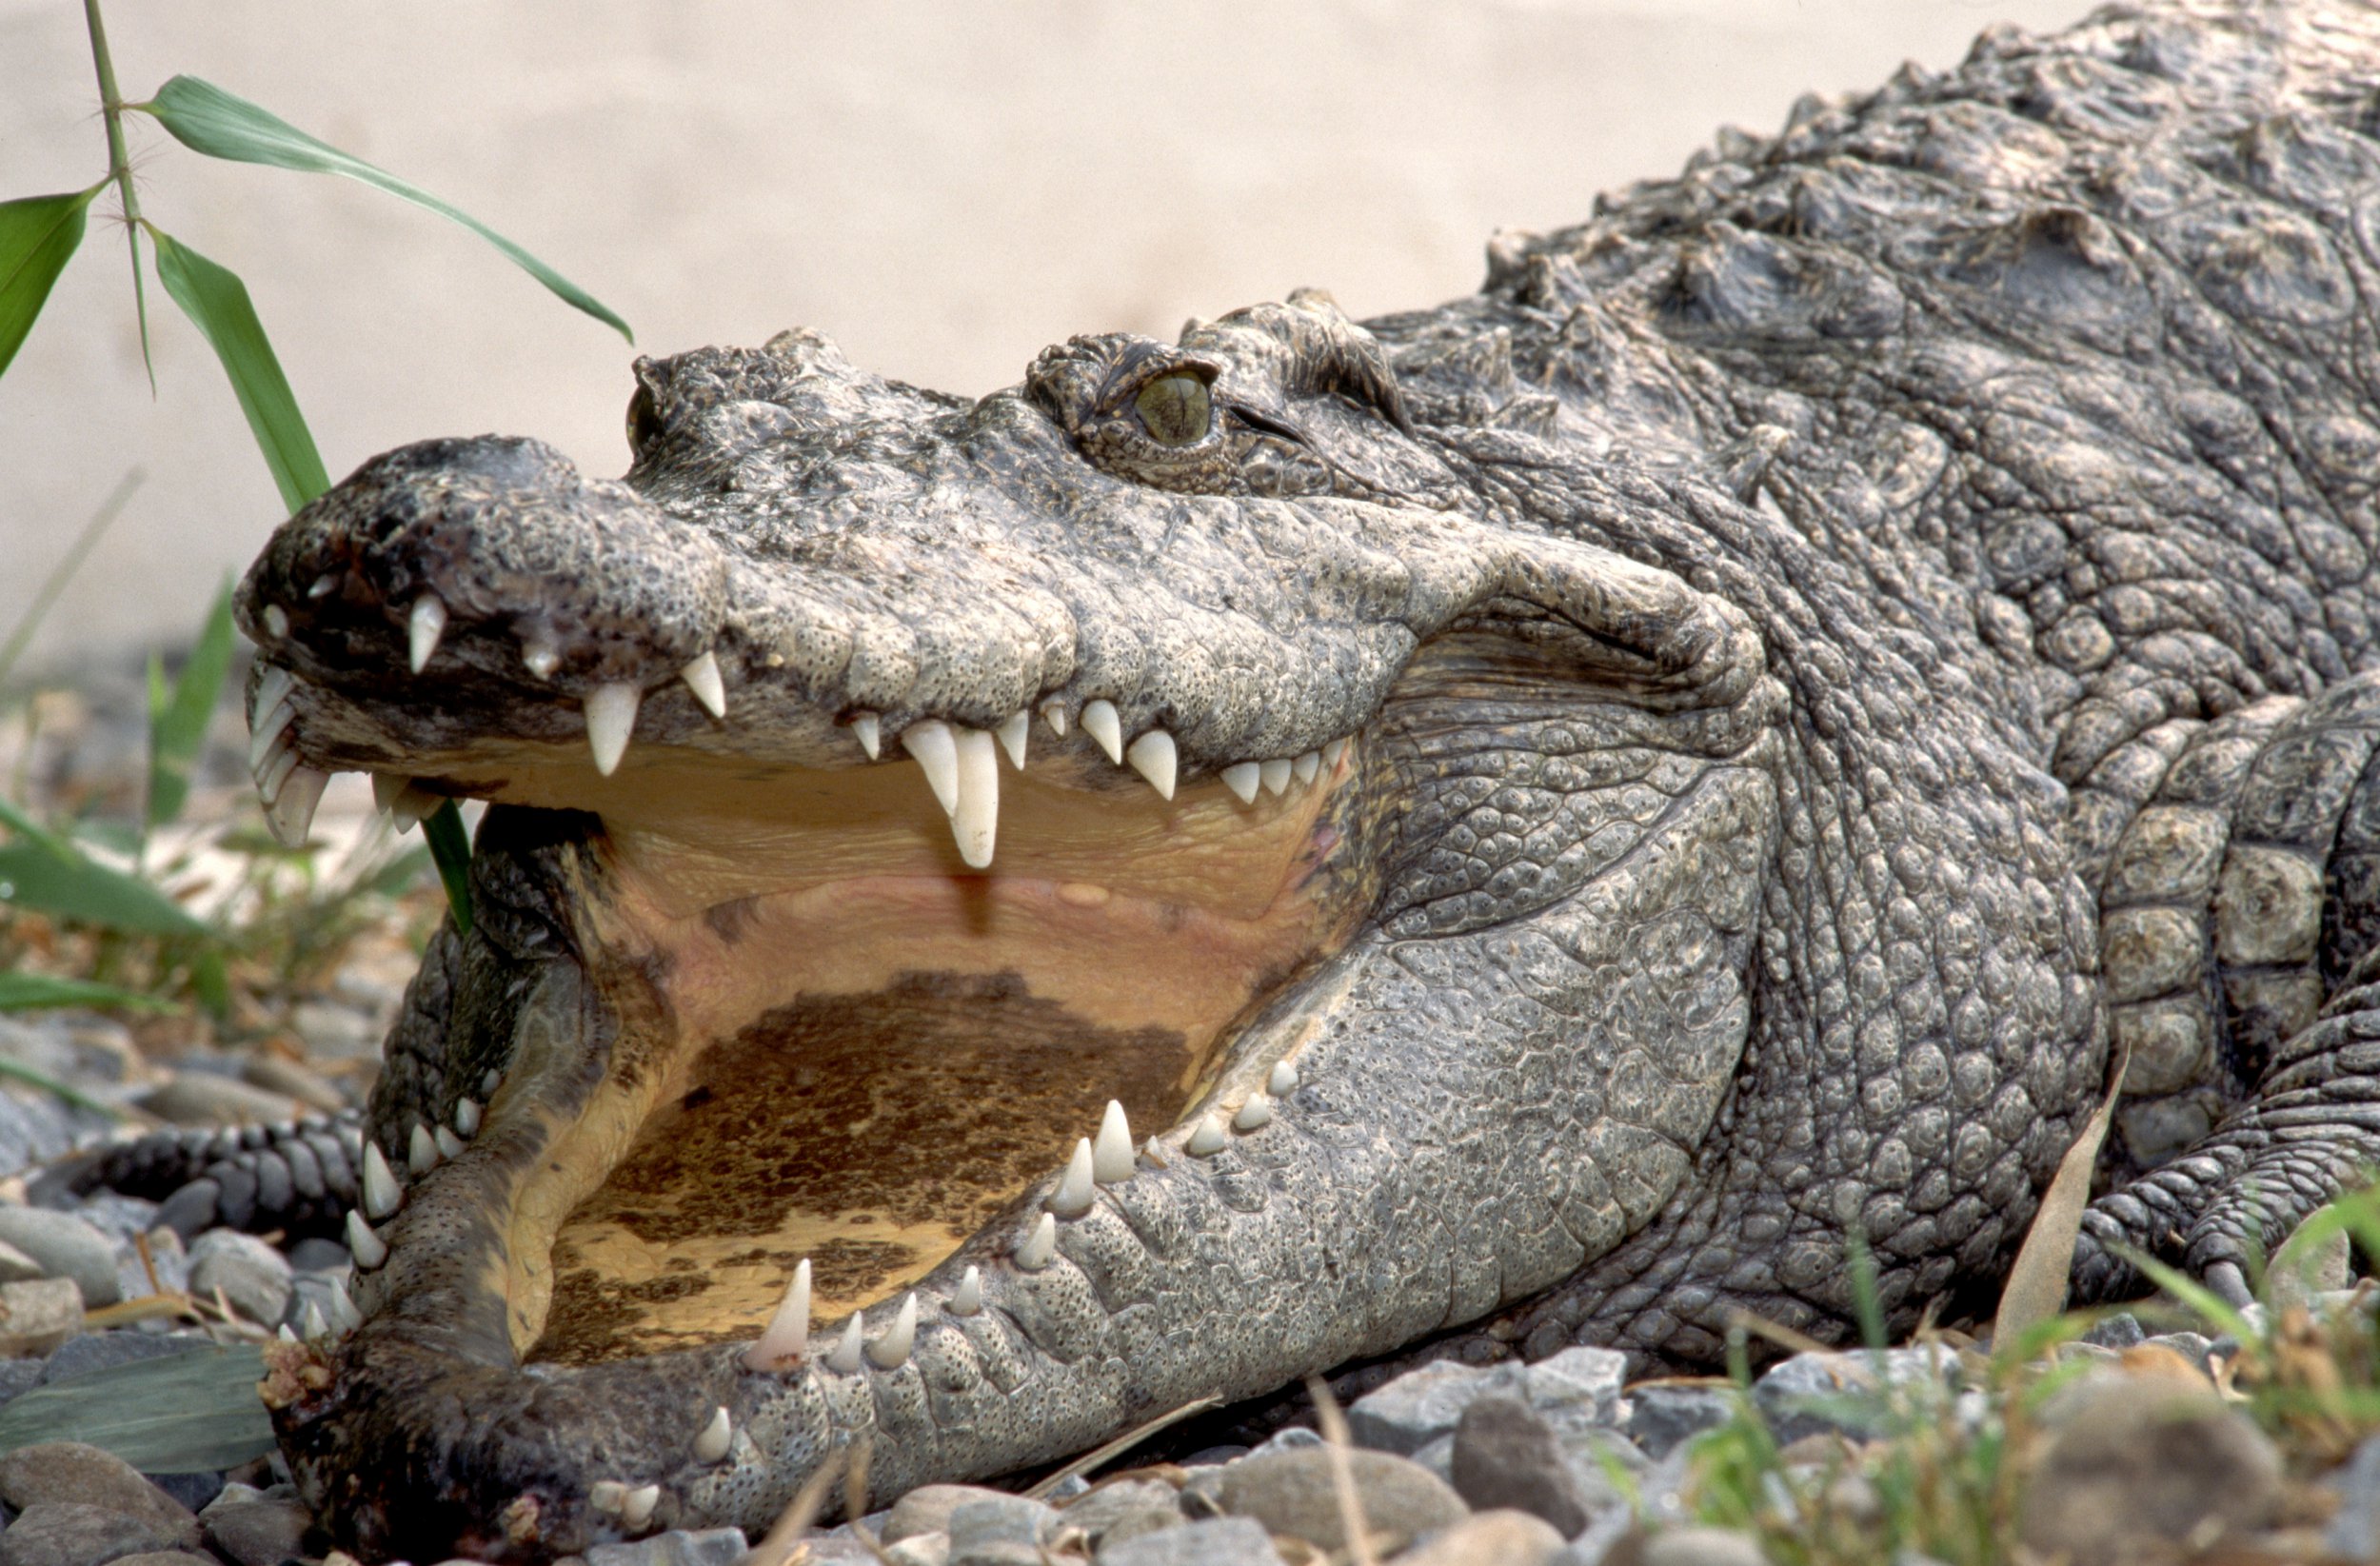 Can a Crocodile Move Its Tongue